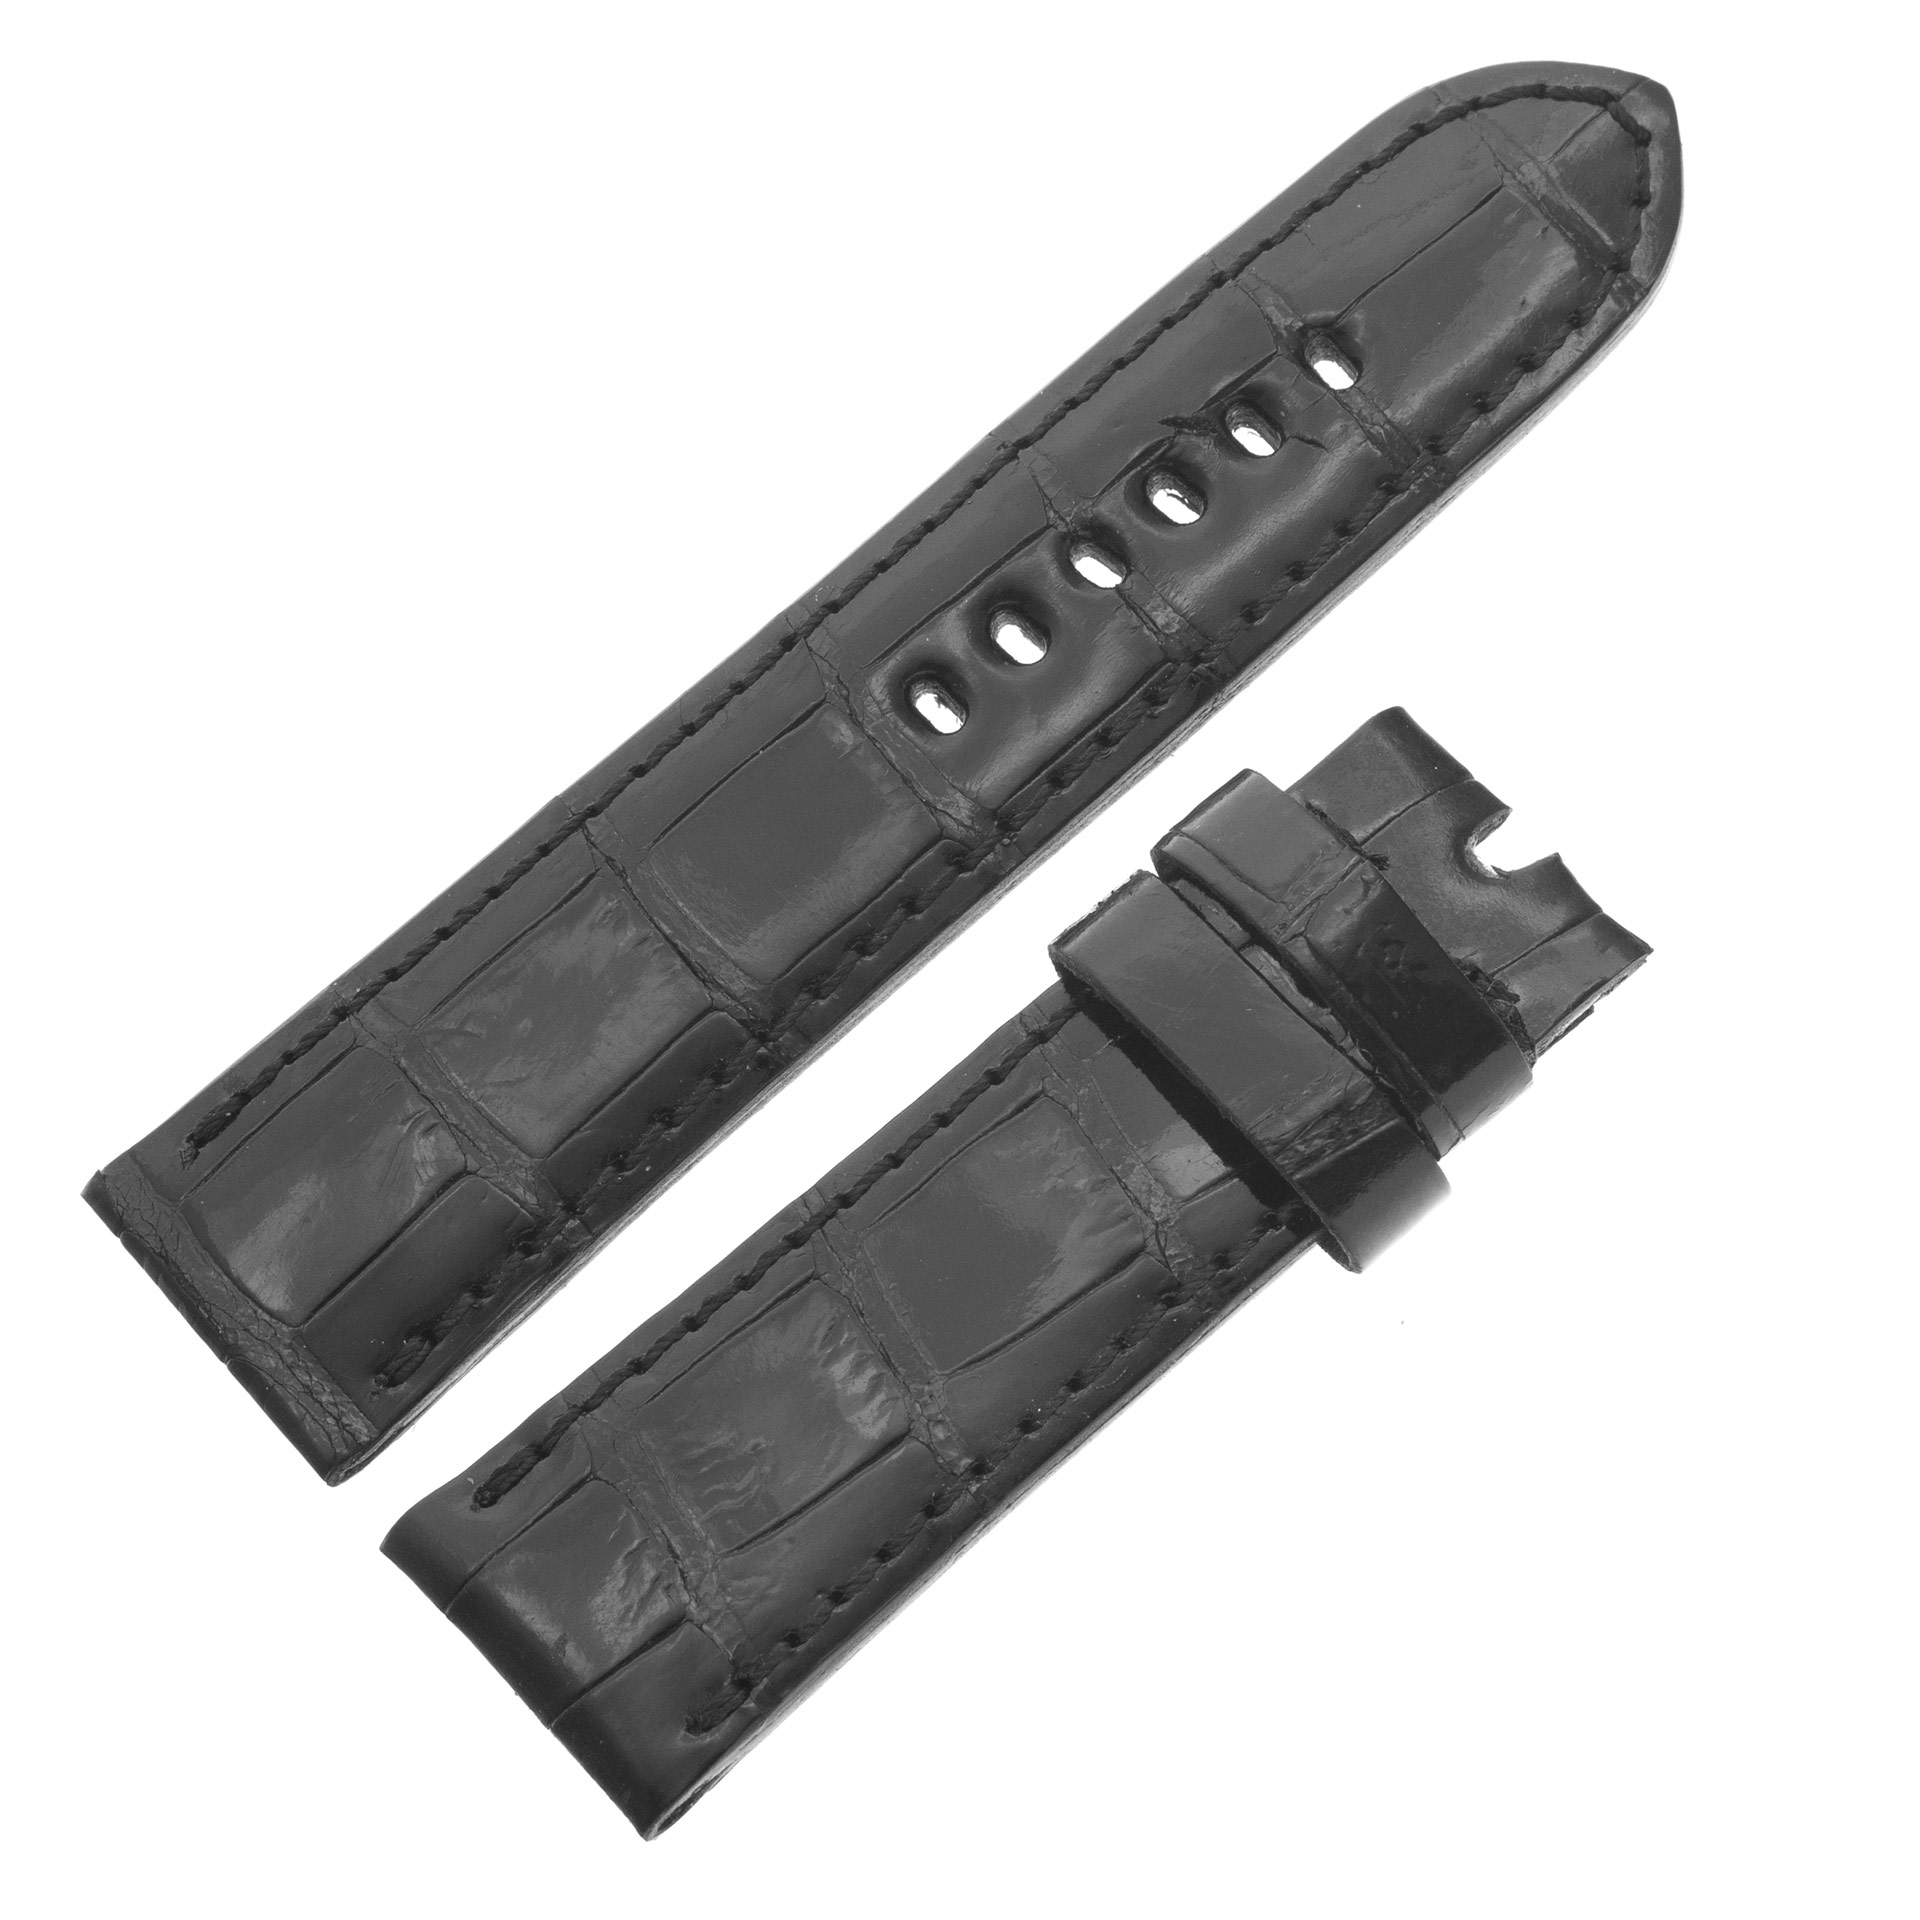 Panerai shiny black alligator strap (25mm x 22.5mm)